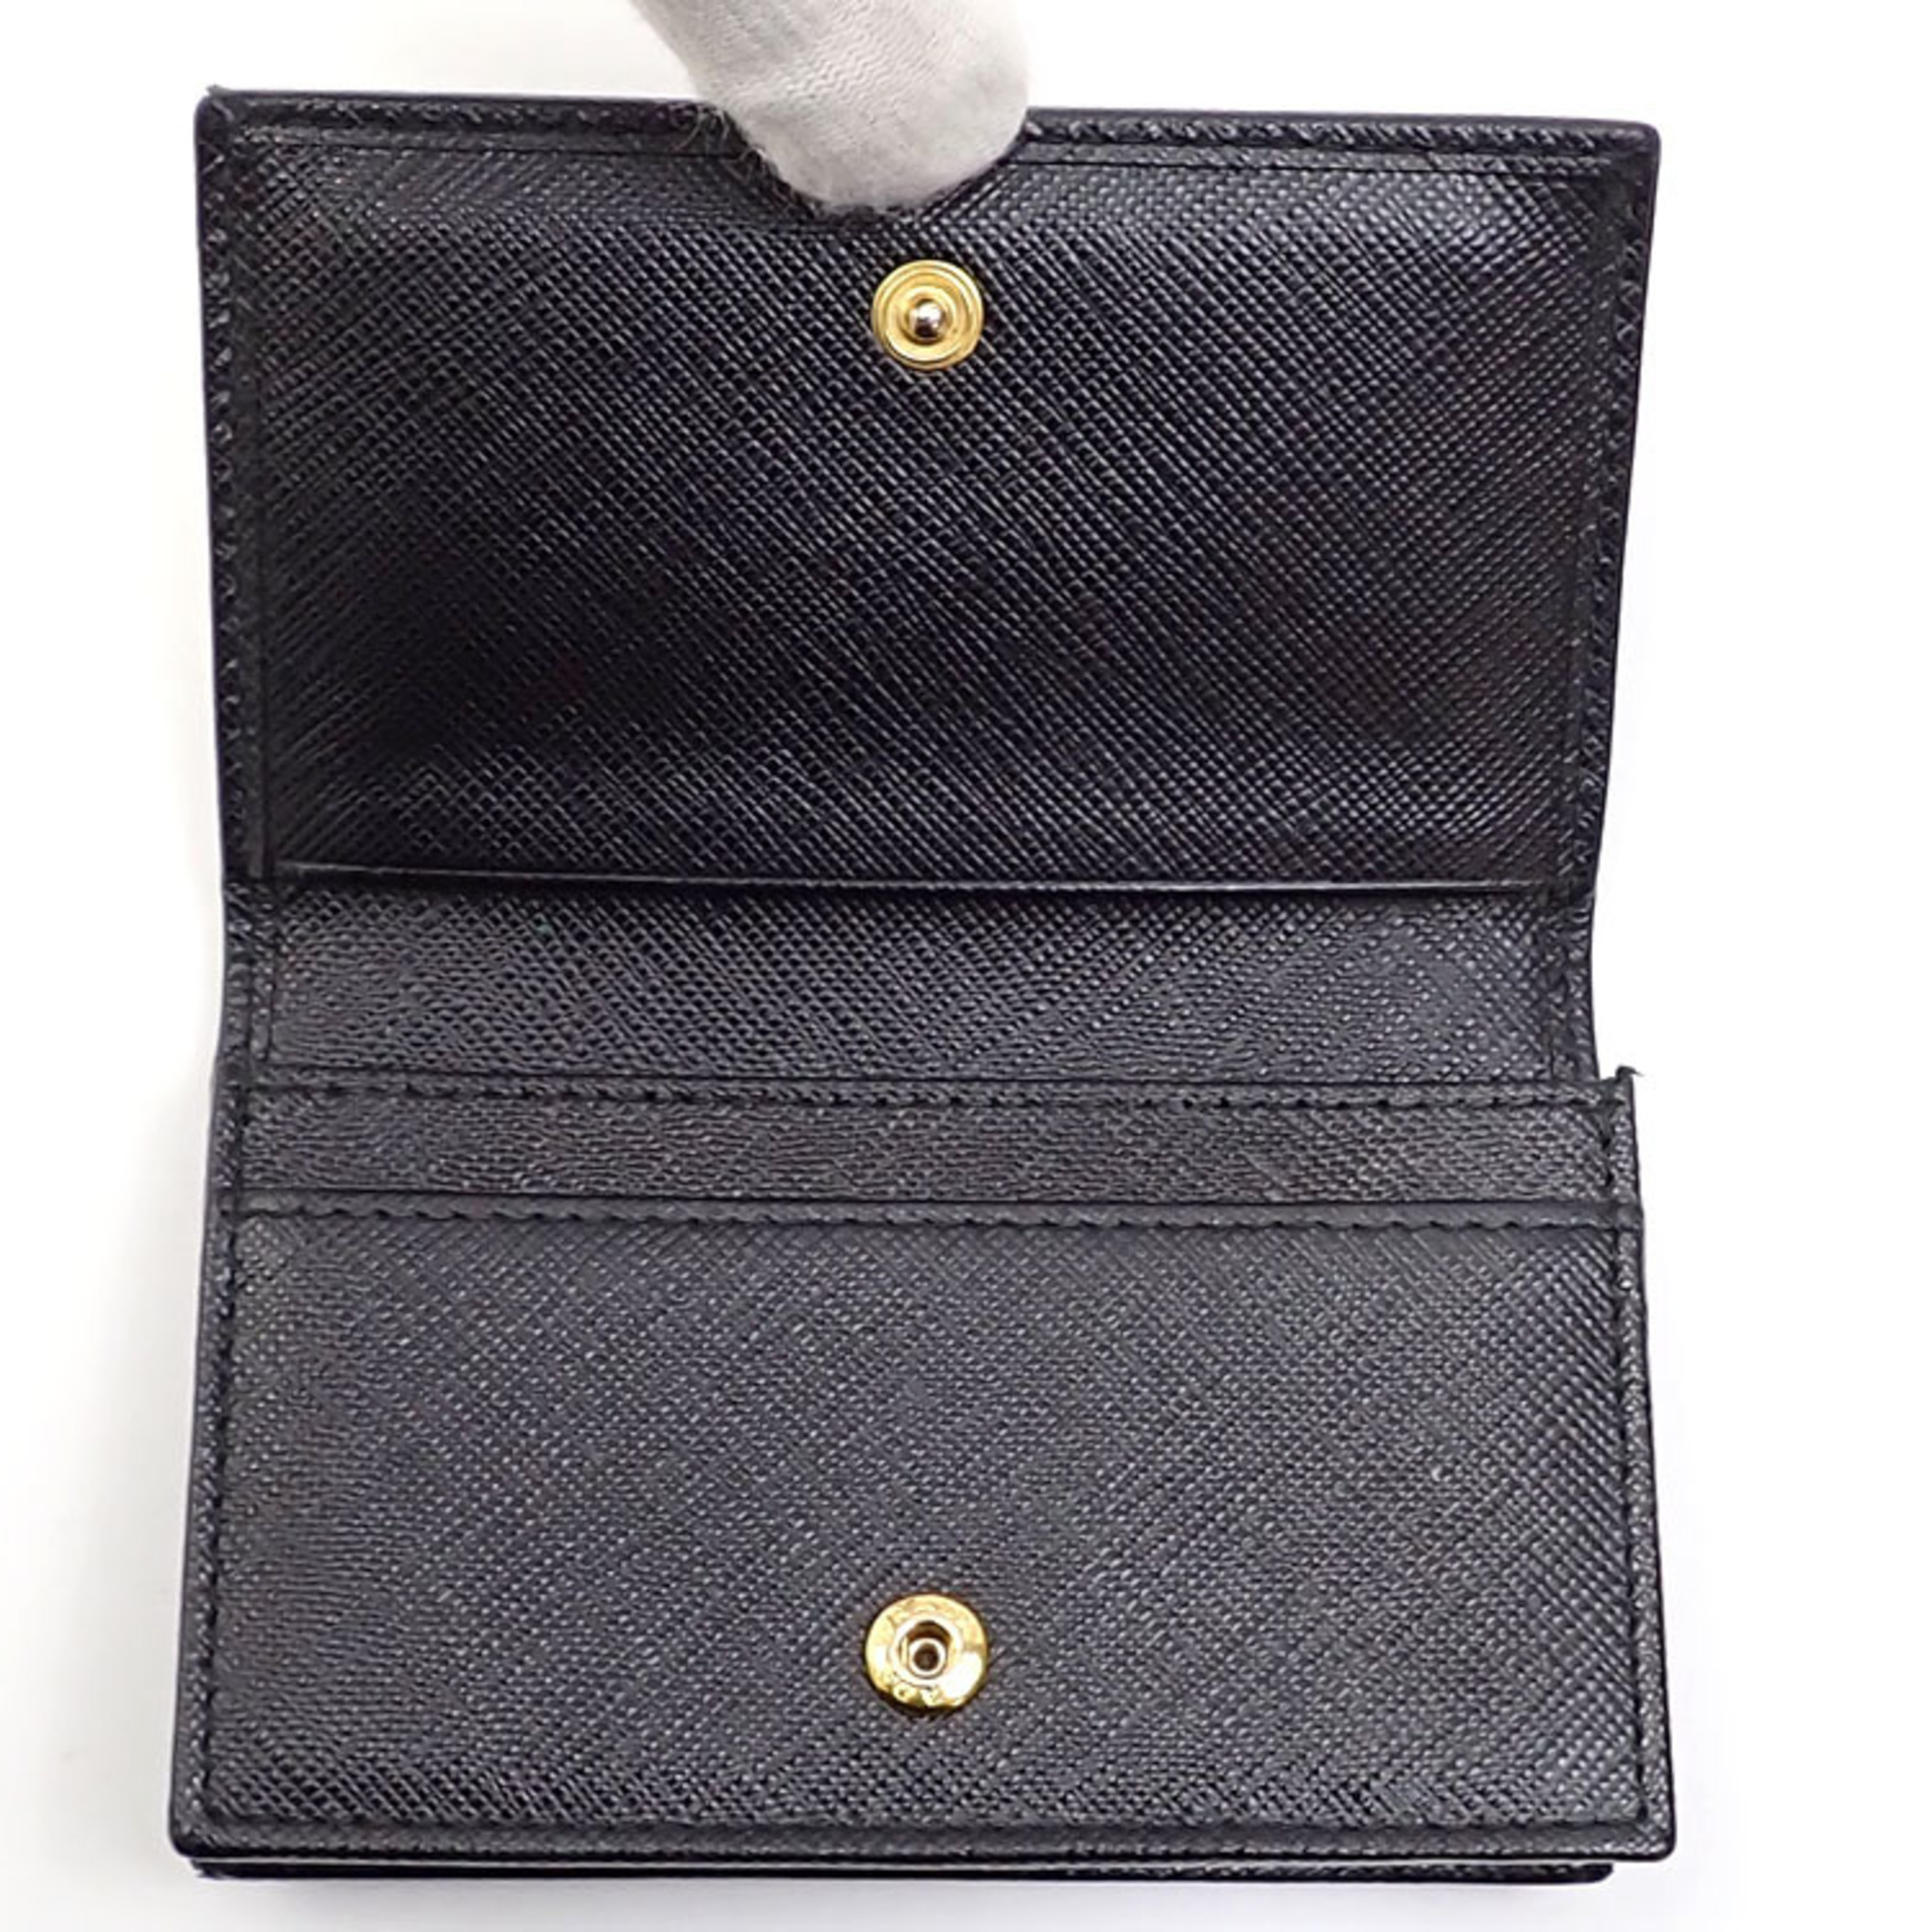 Prada Card Case for Women, Black, Saffiano Leather, 1MC122, Business Holder